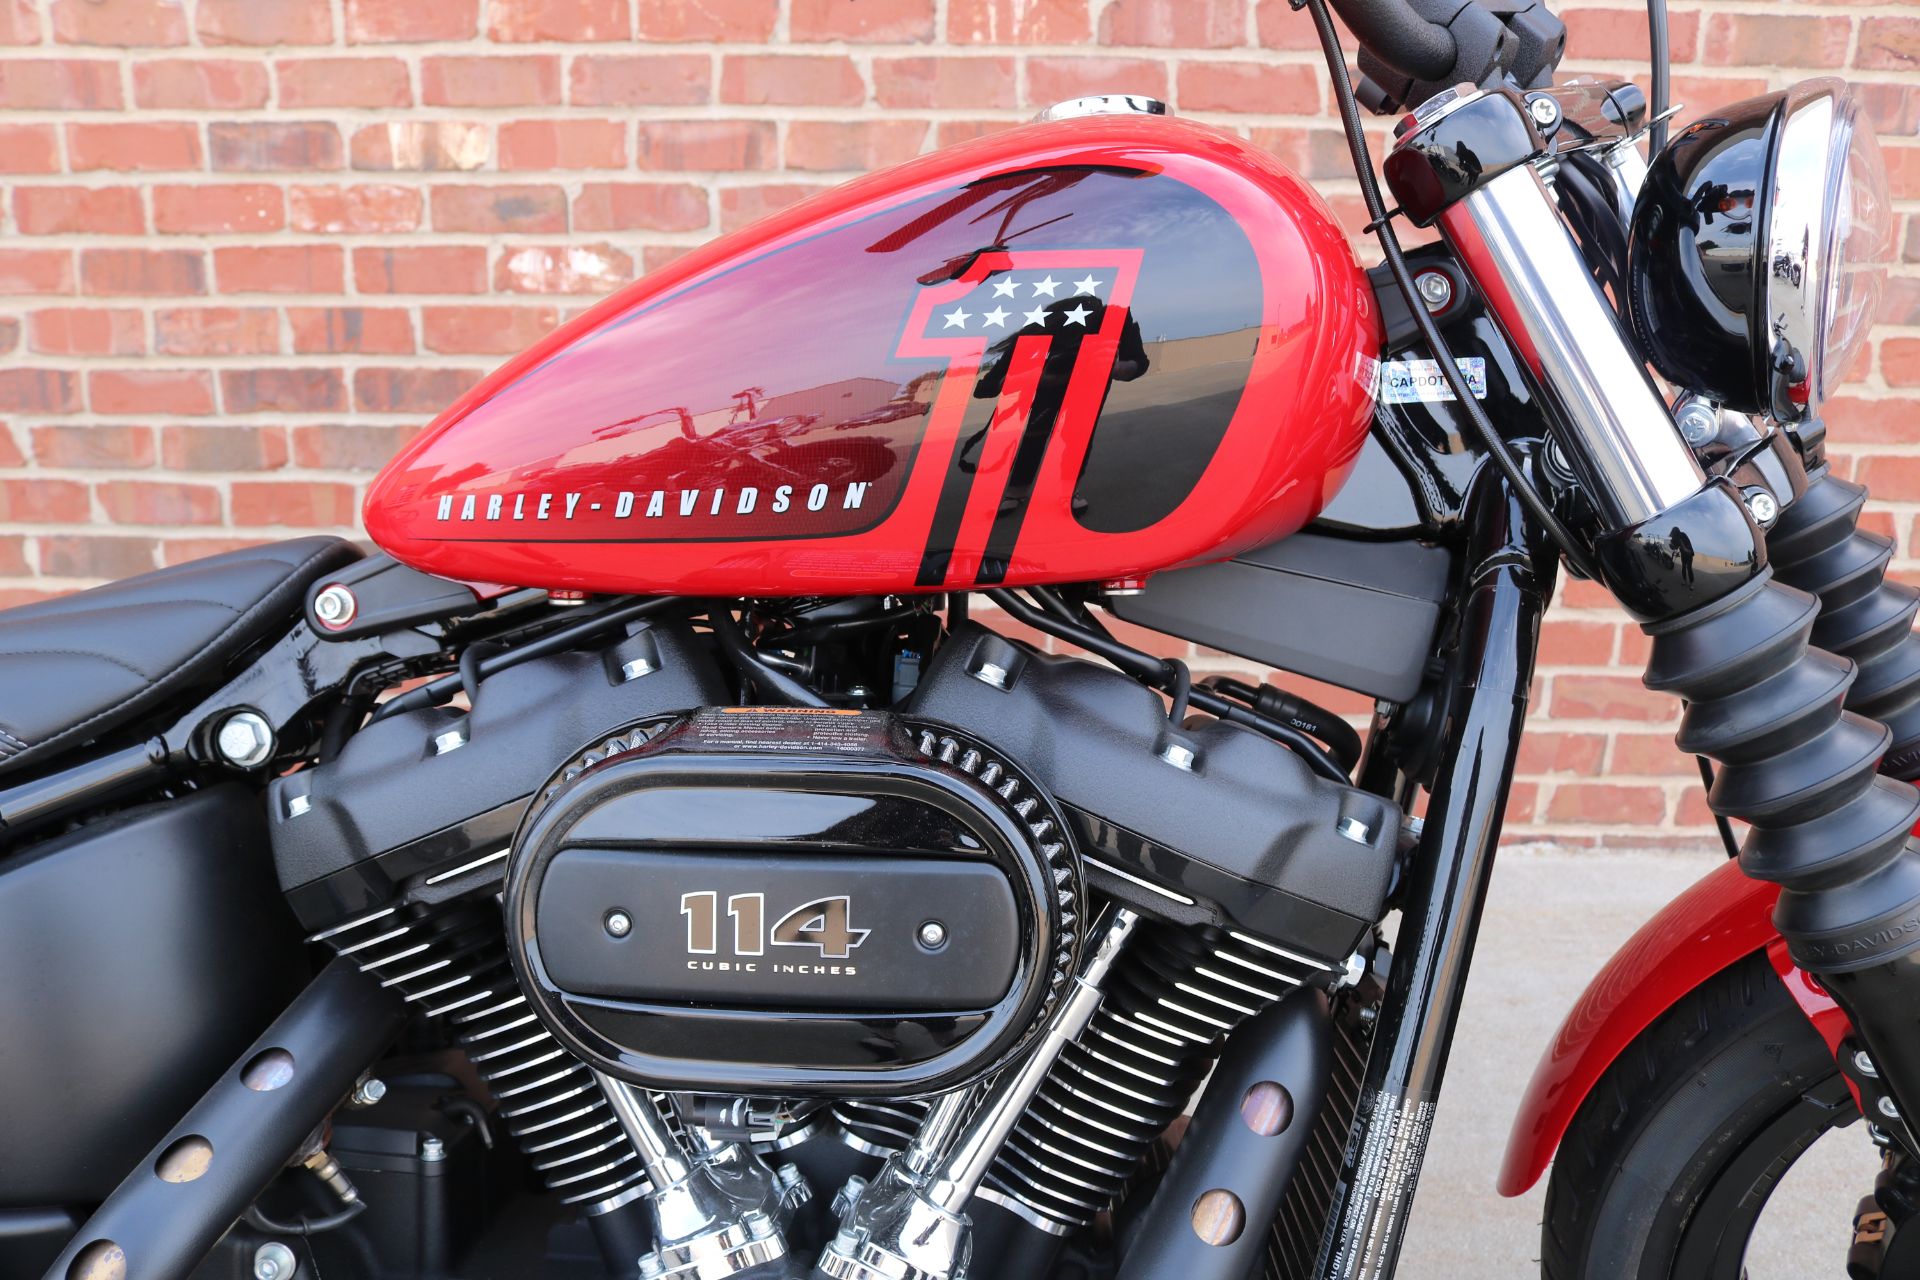 2023 Harley-Davidson Street Bob® 114 in Ames, Iowa - Photo 4